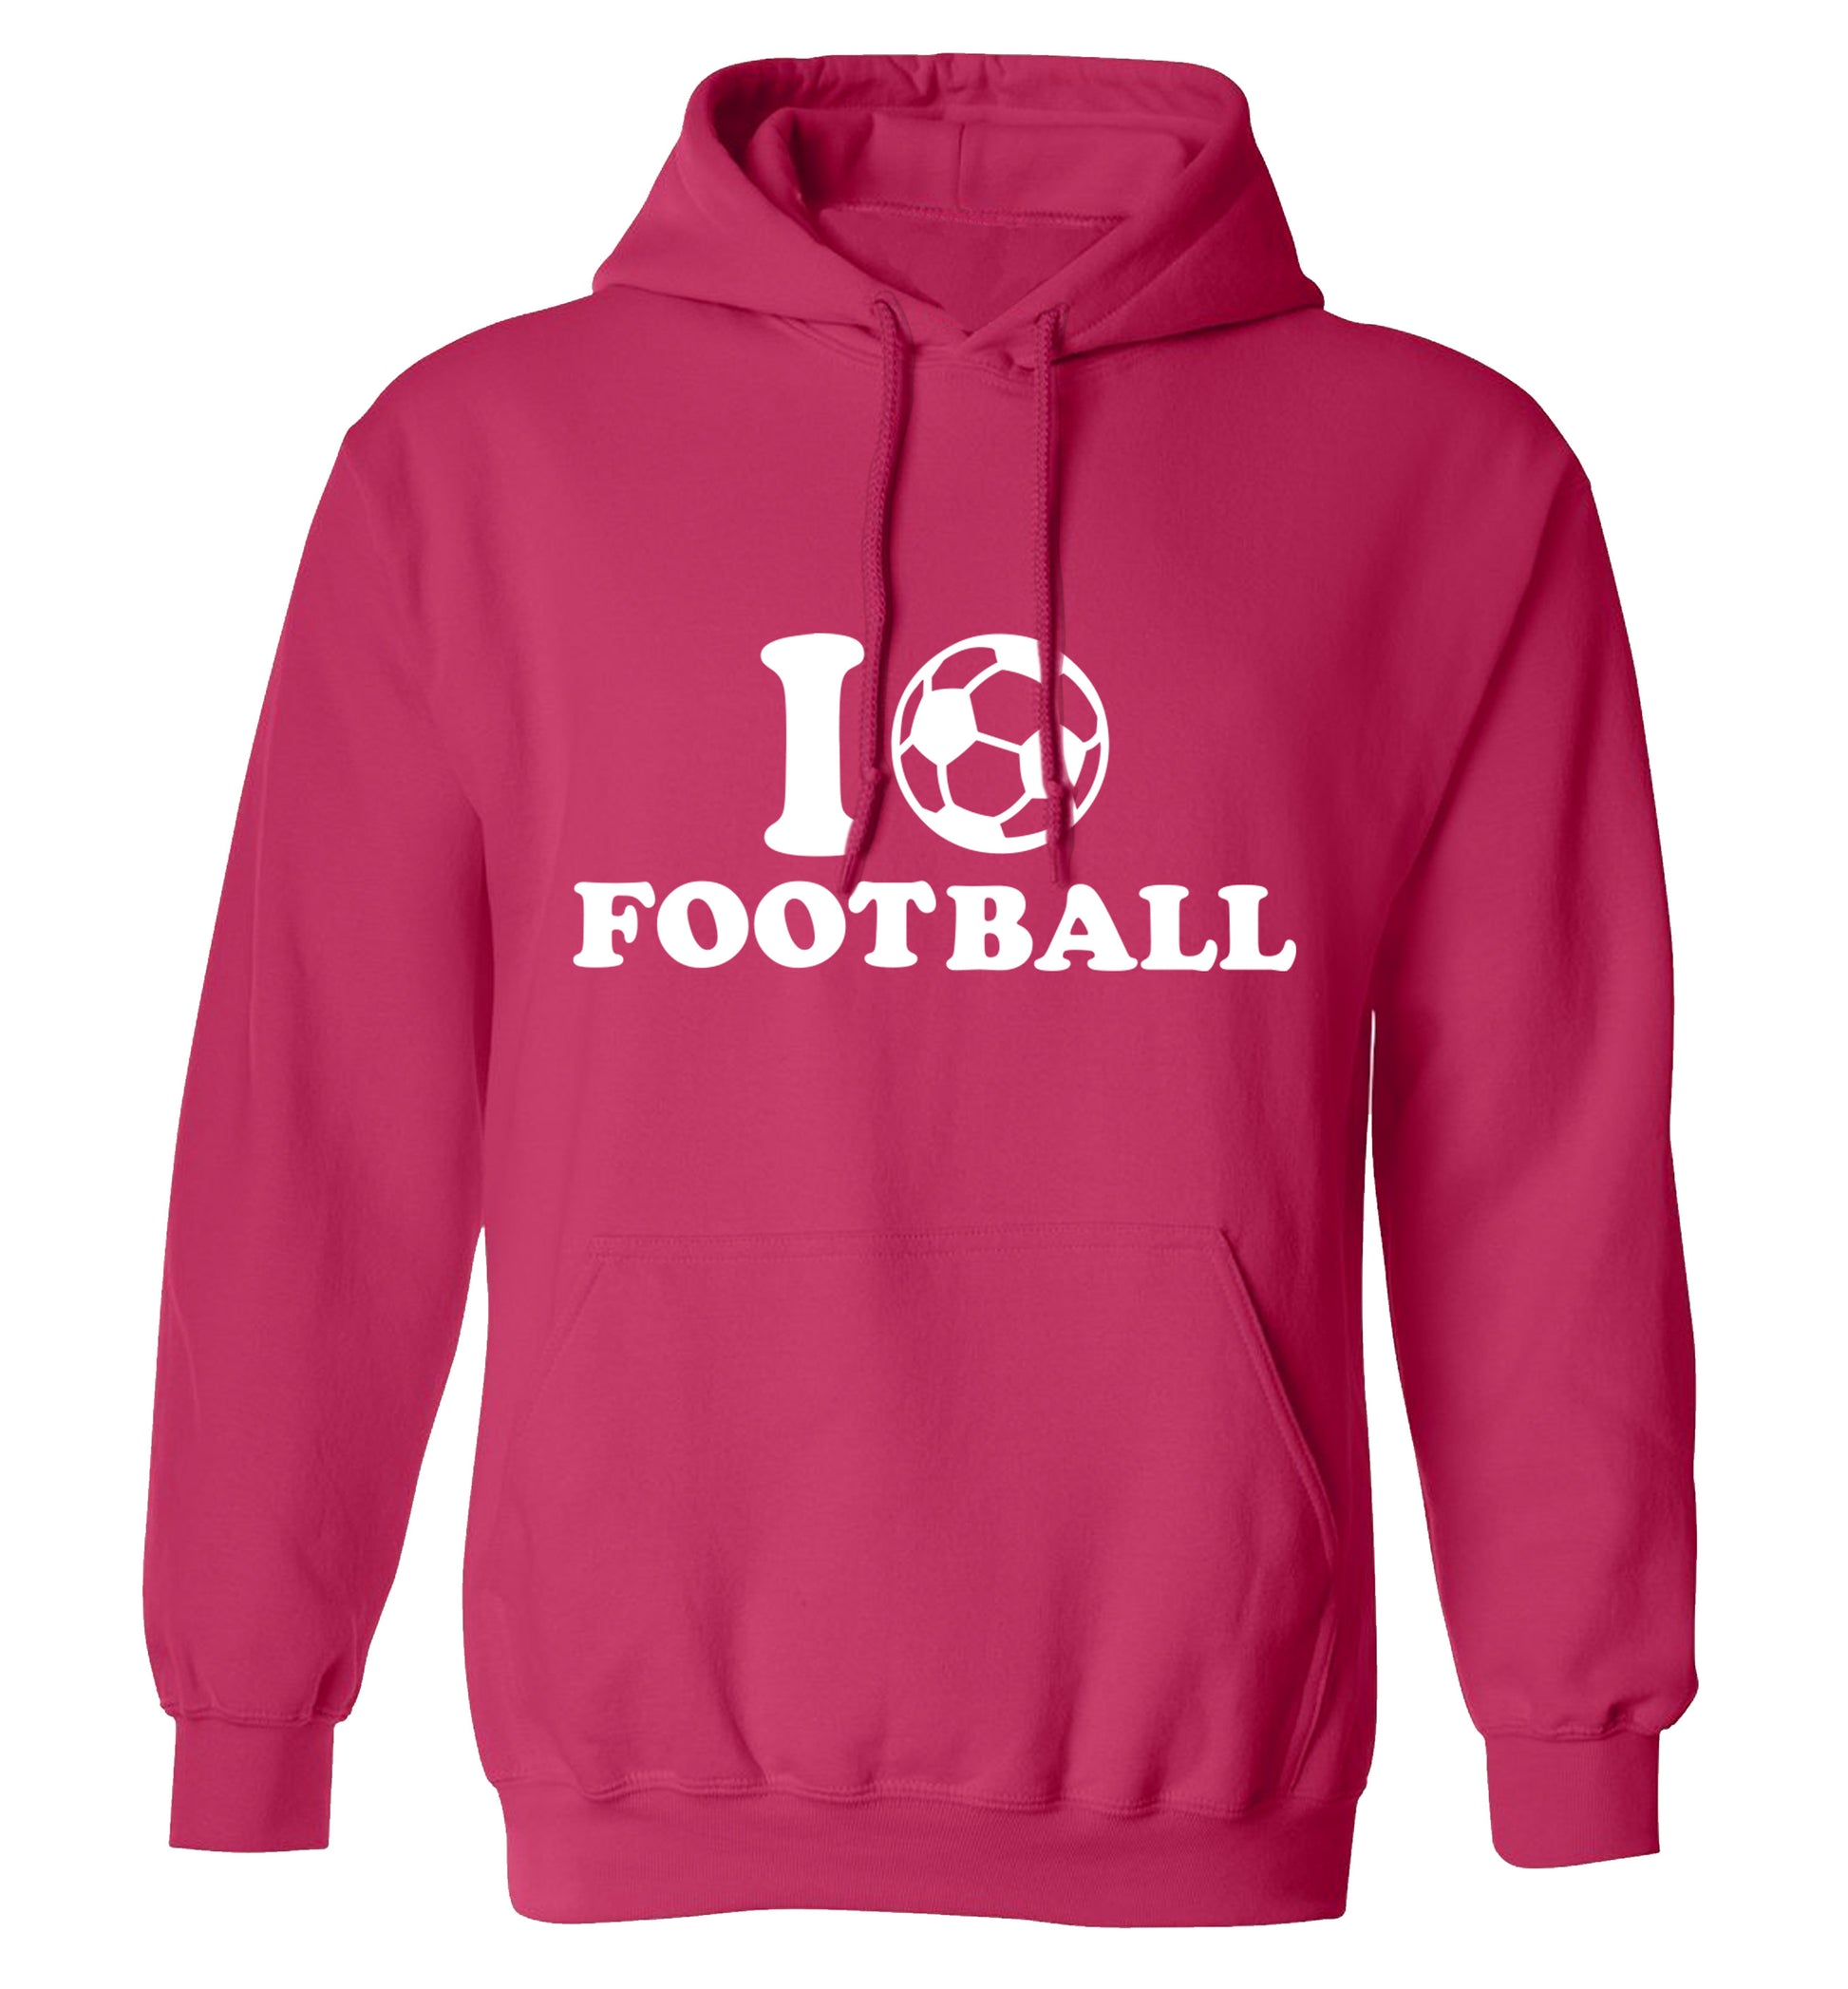 I love football adults unisexpink hoodie 2XL